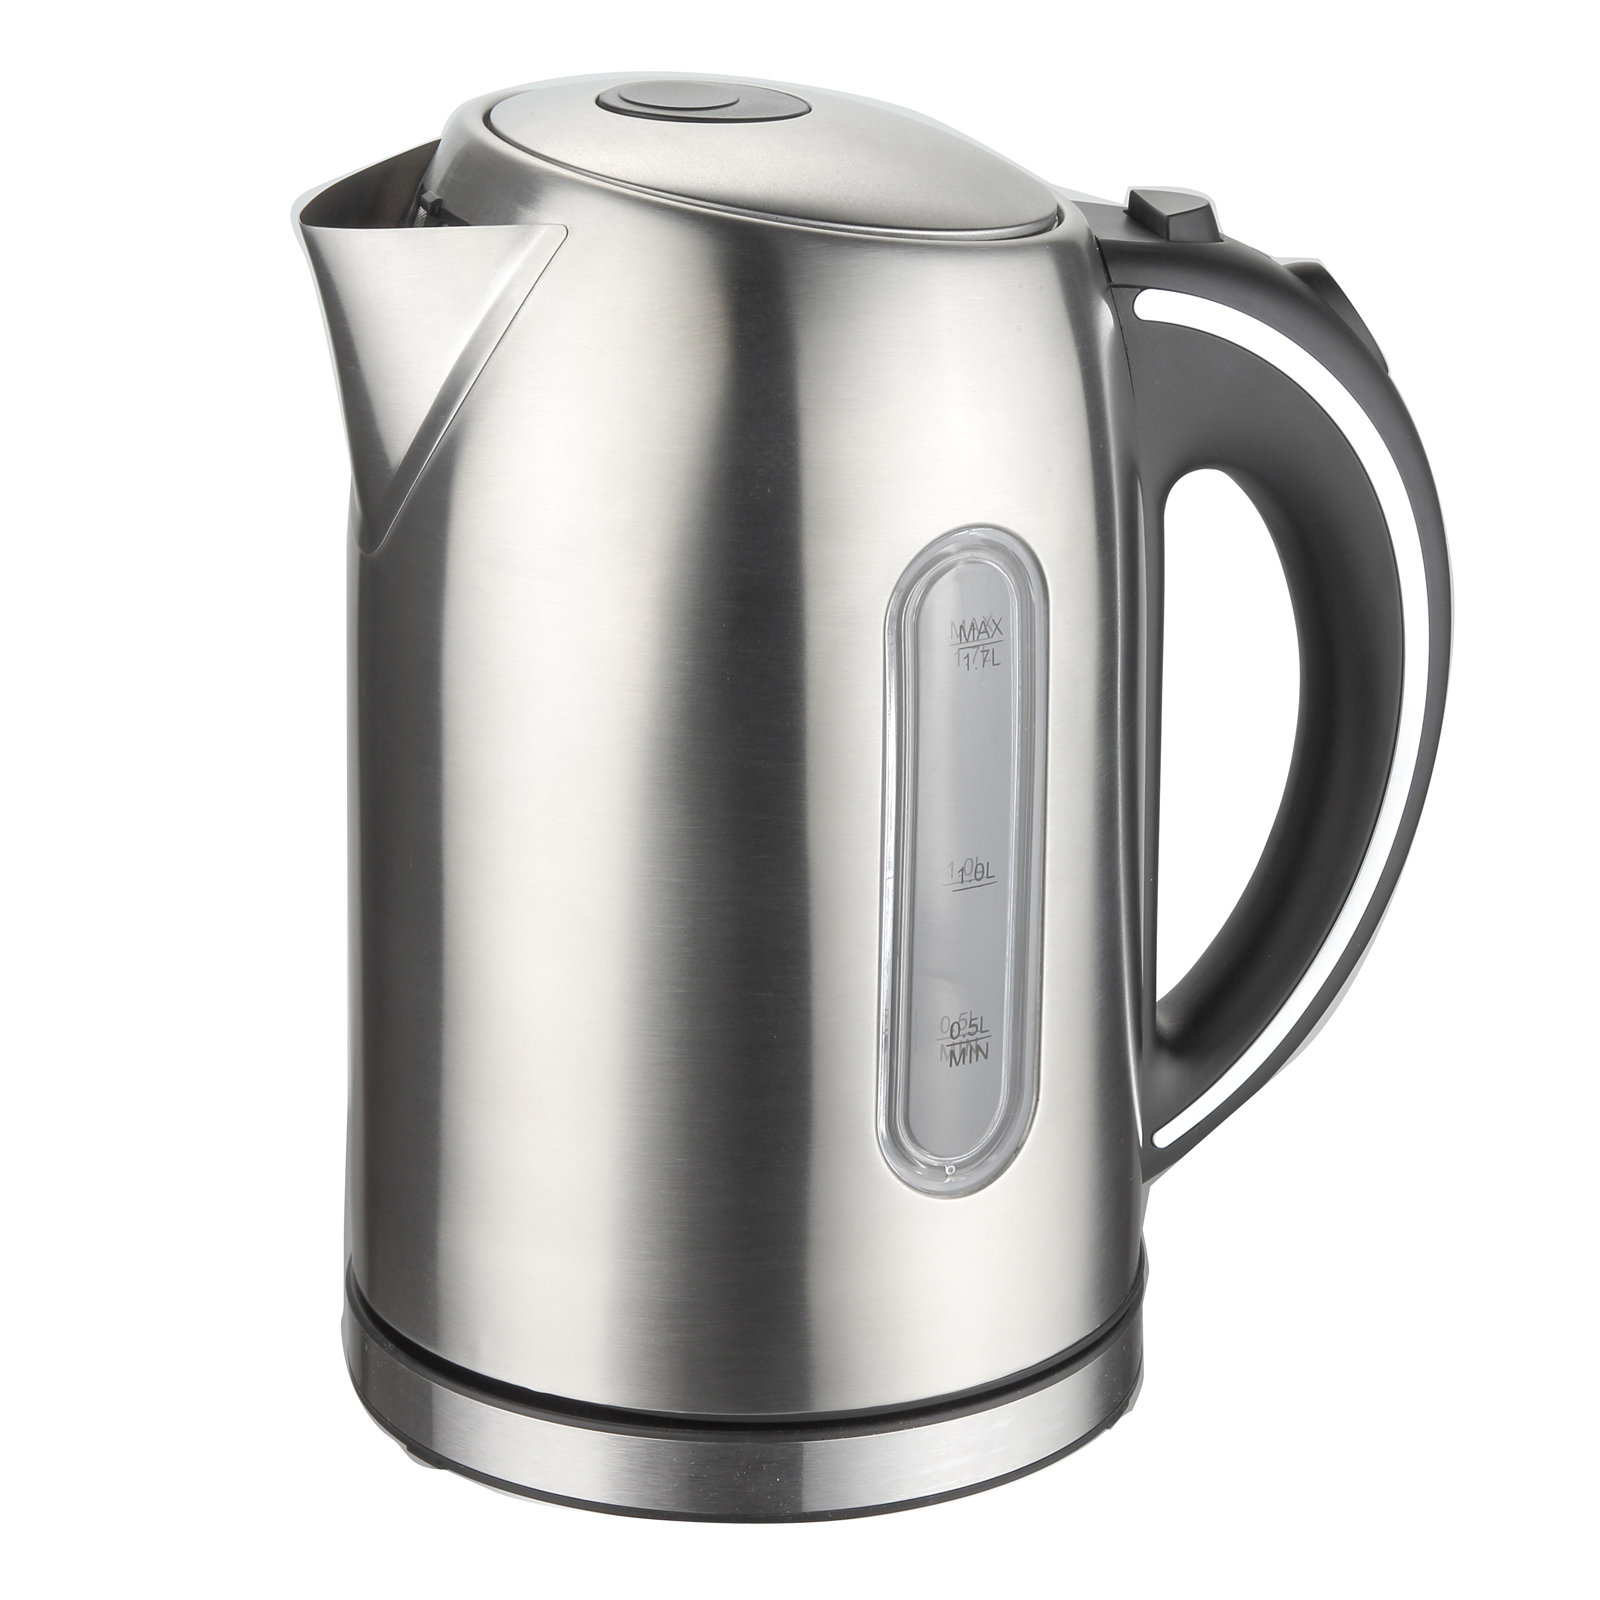 megachef tea kettle